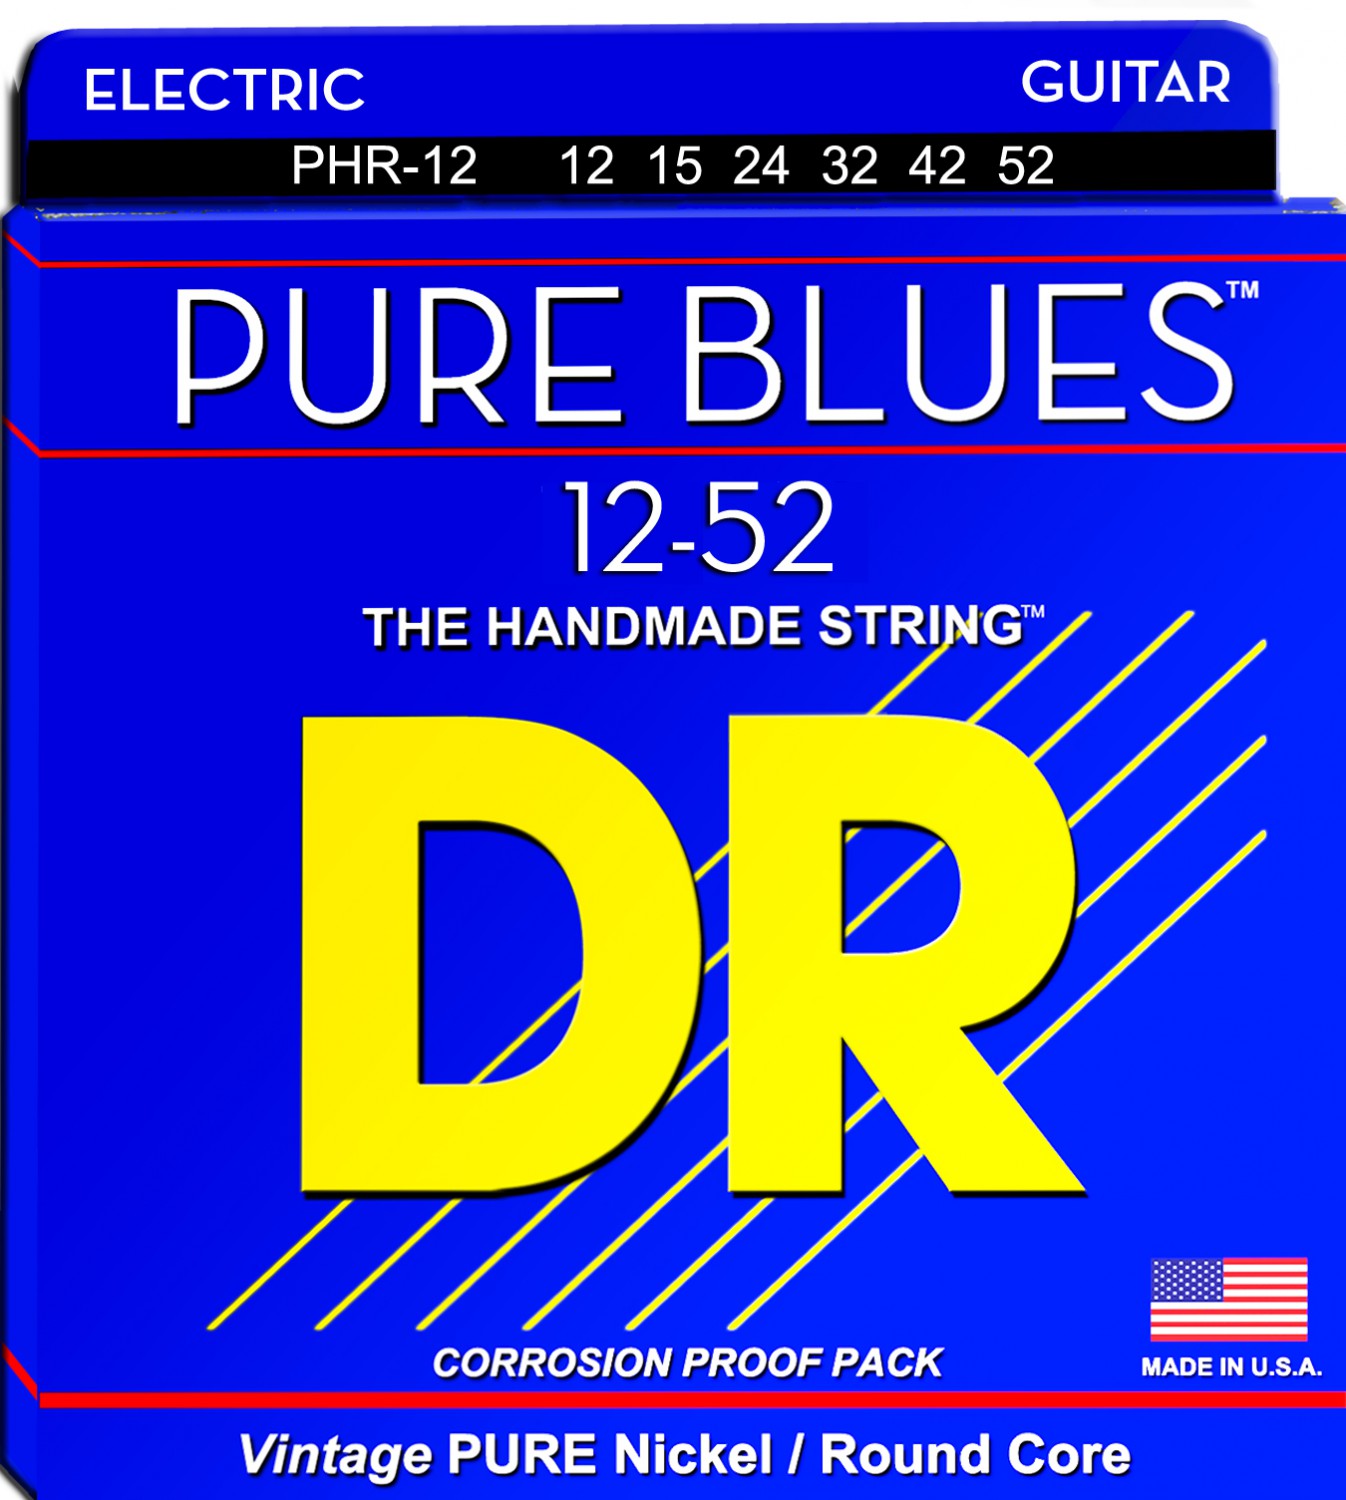 DR PURE BLUES - PHR-12-52 - struny do gitary elektrycznej Set, Extra Heavy, .012-.052, wound G-String